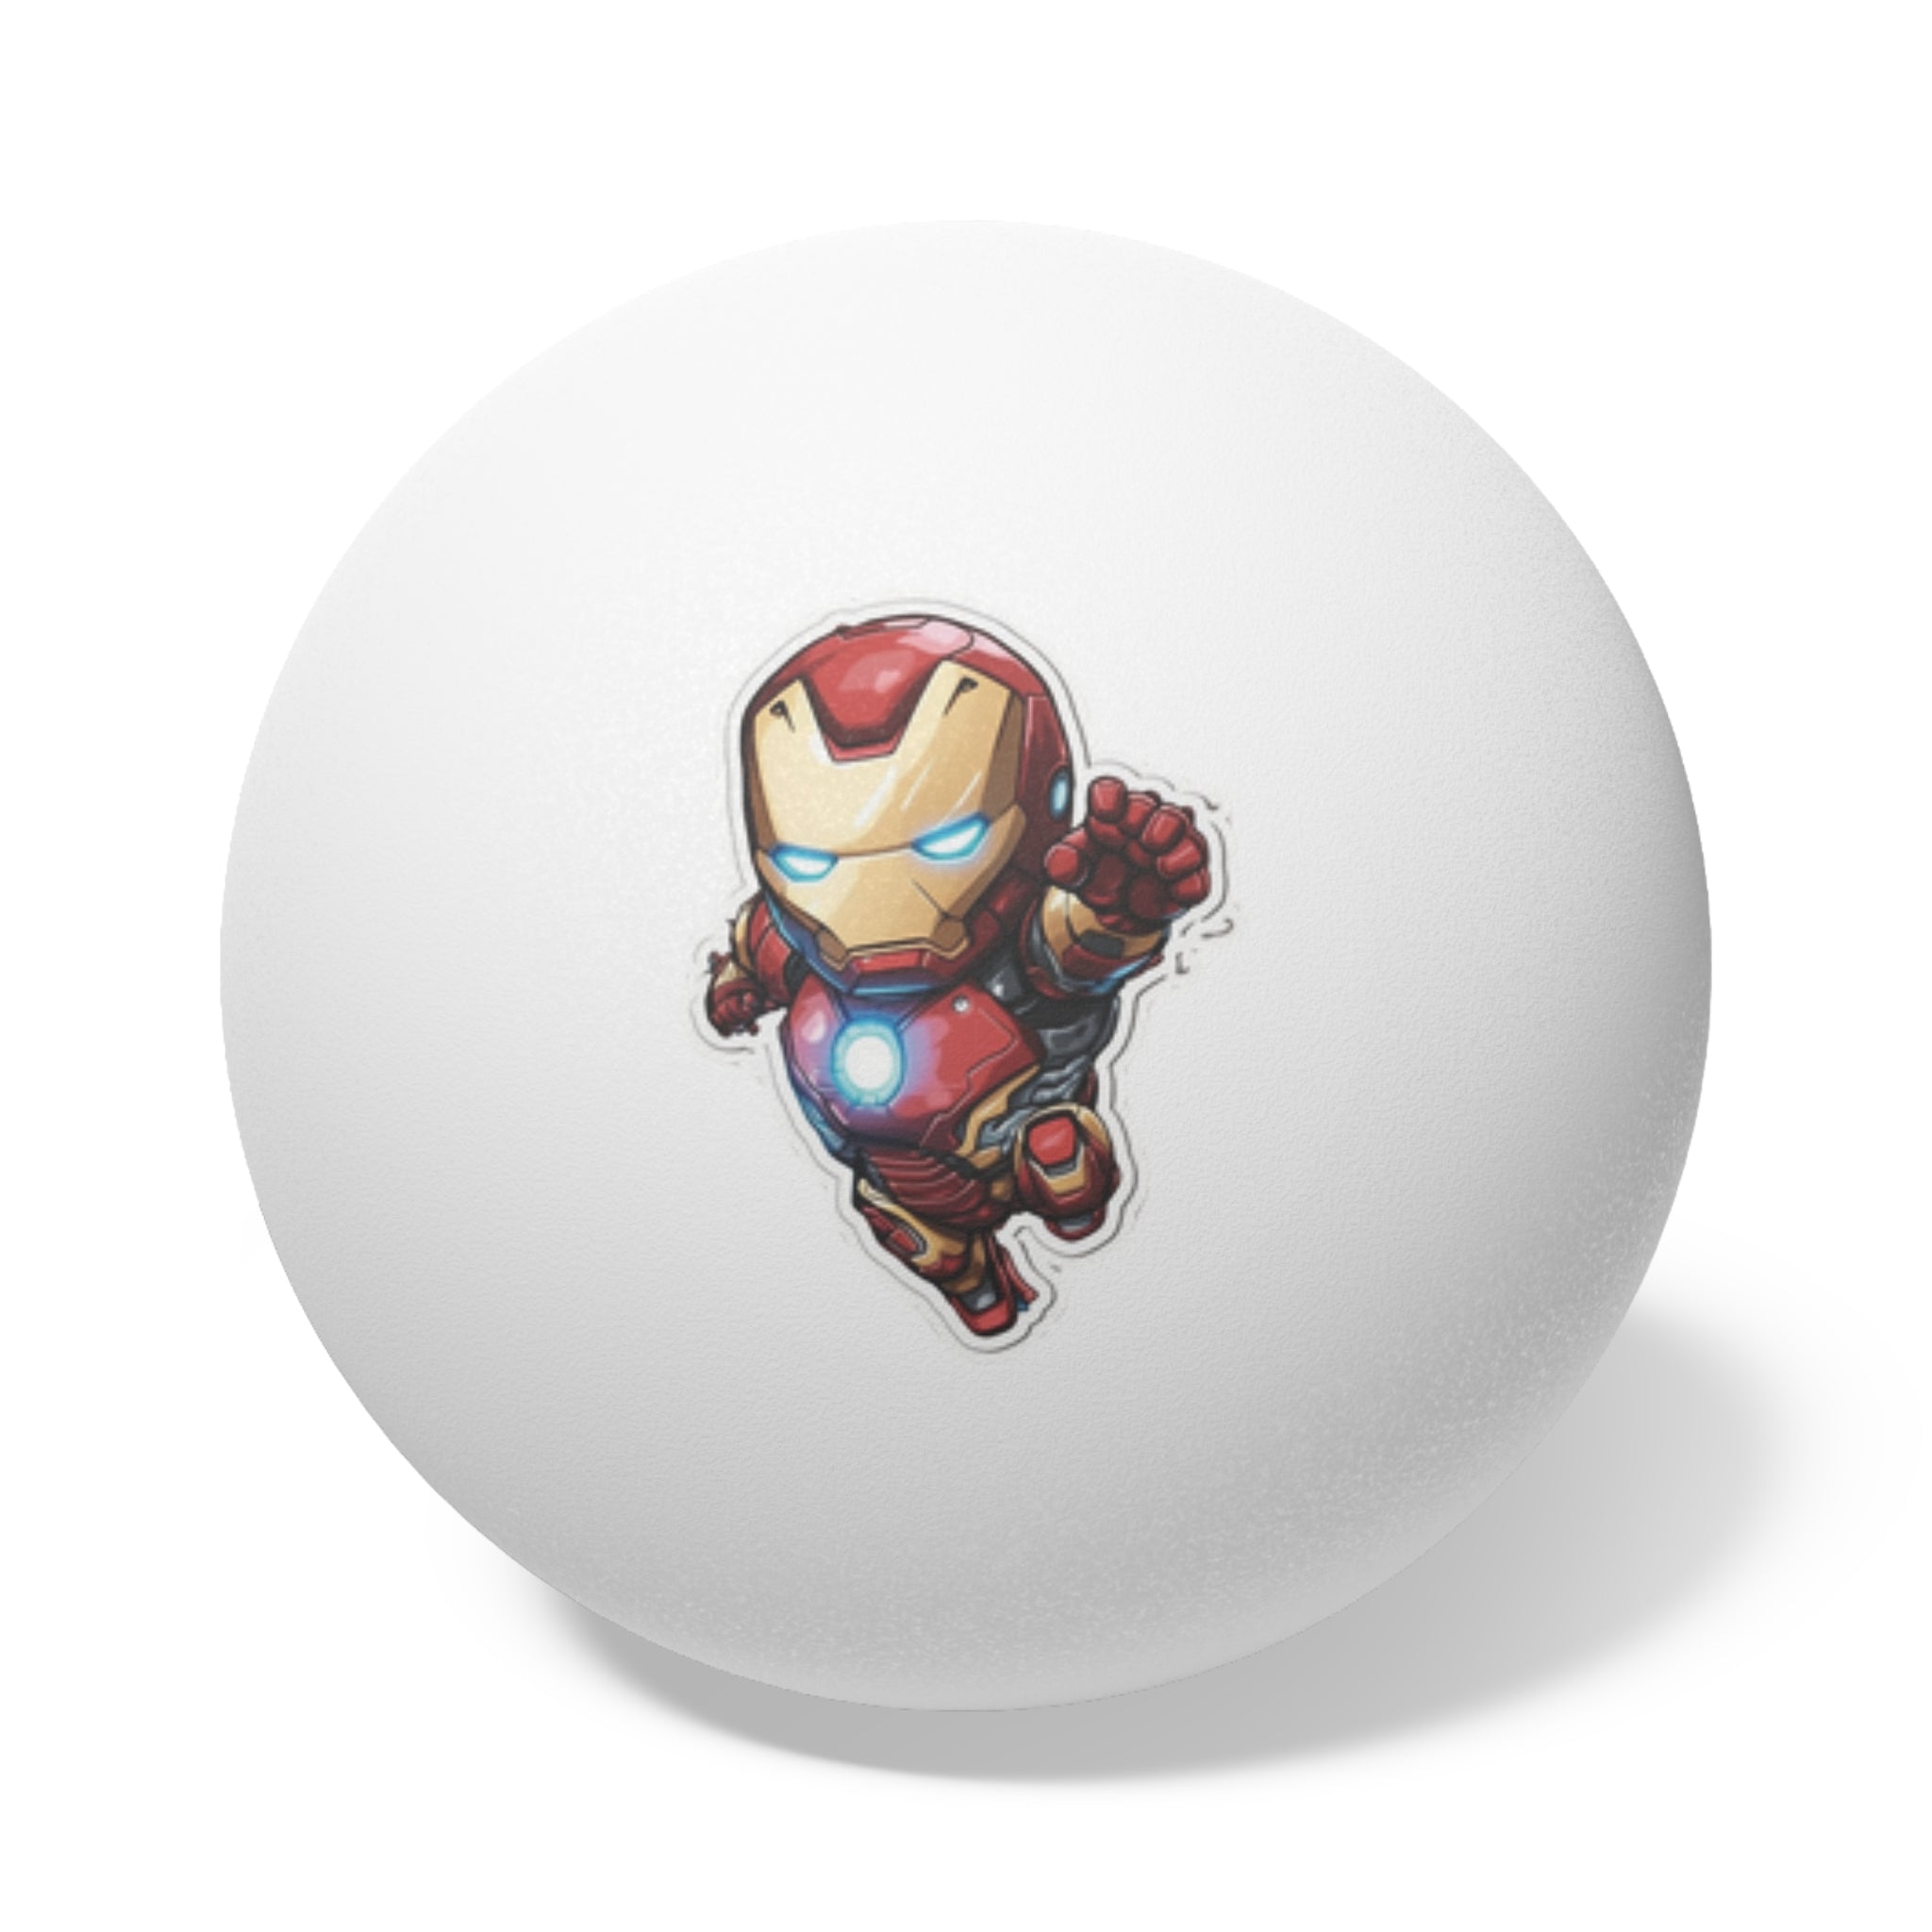 Ping Pong Balls, 6 pcs - Pop Art - Baby Iron-Man